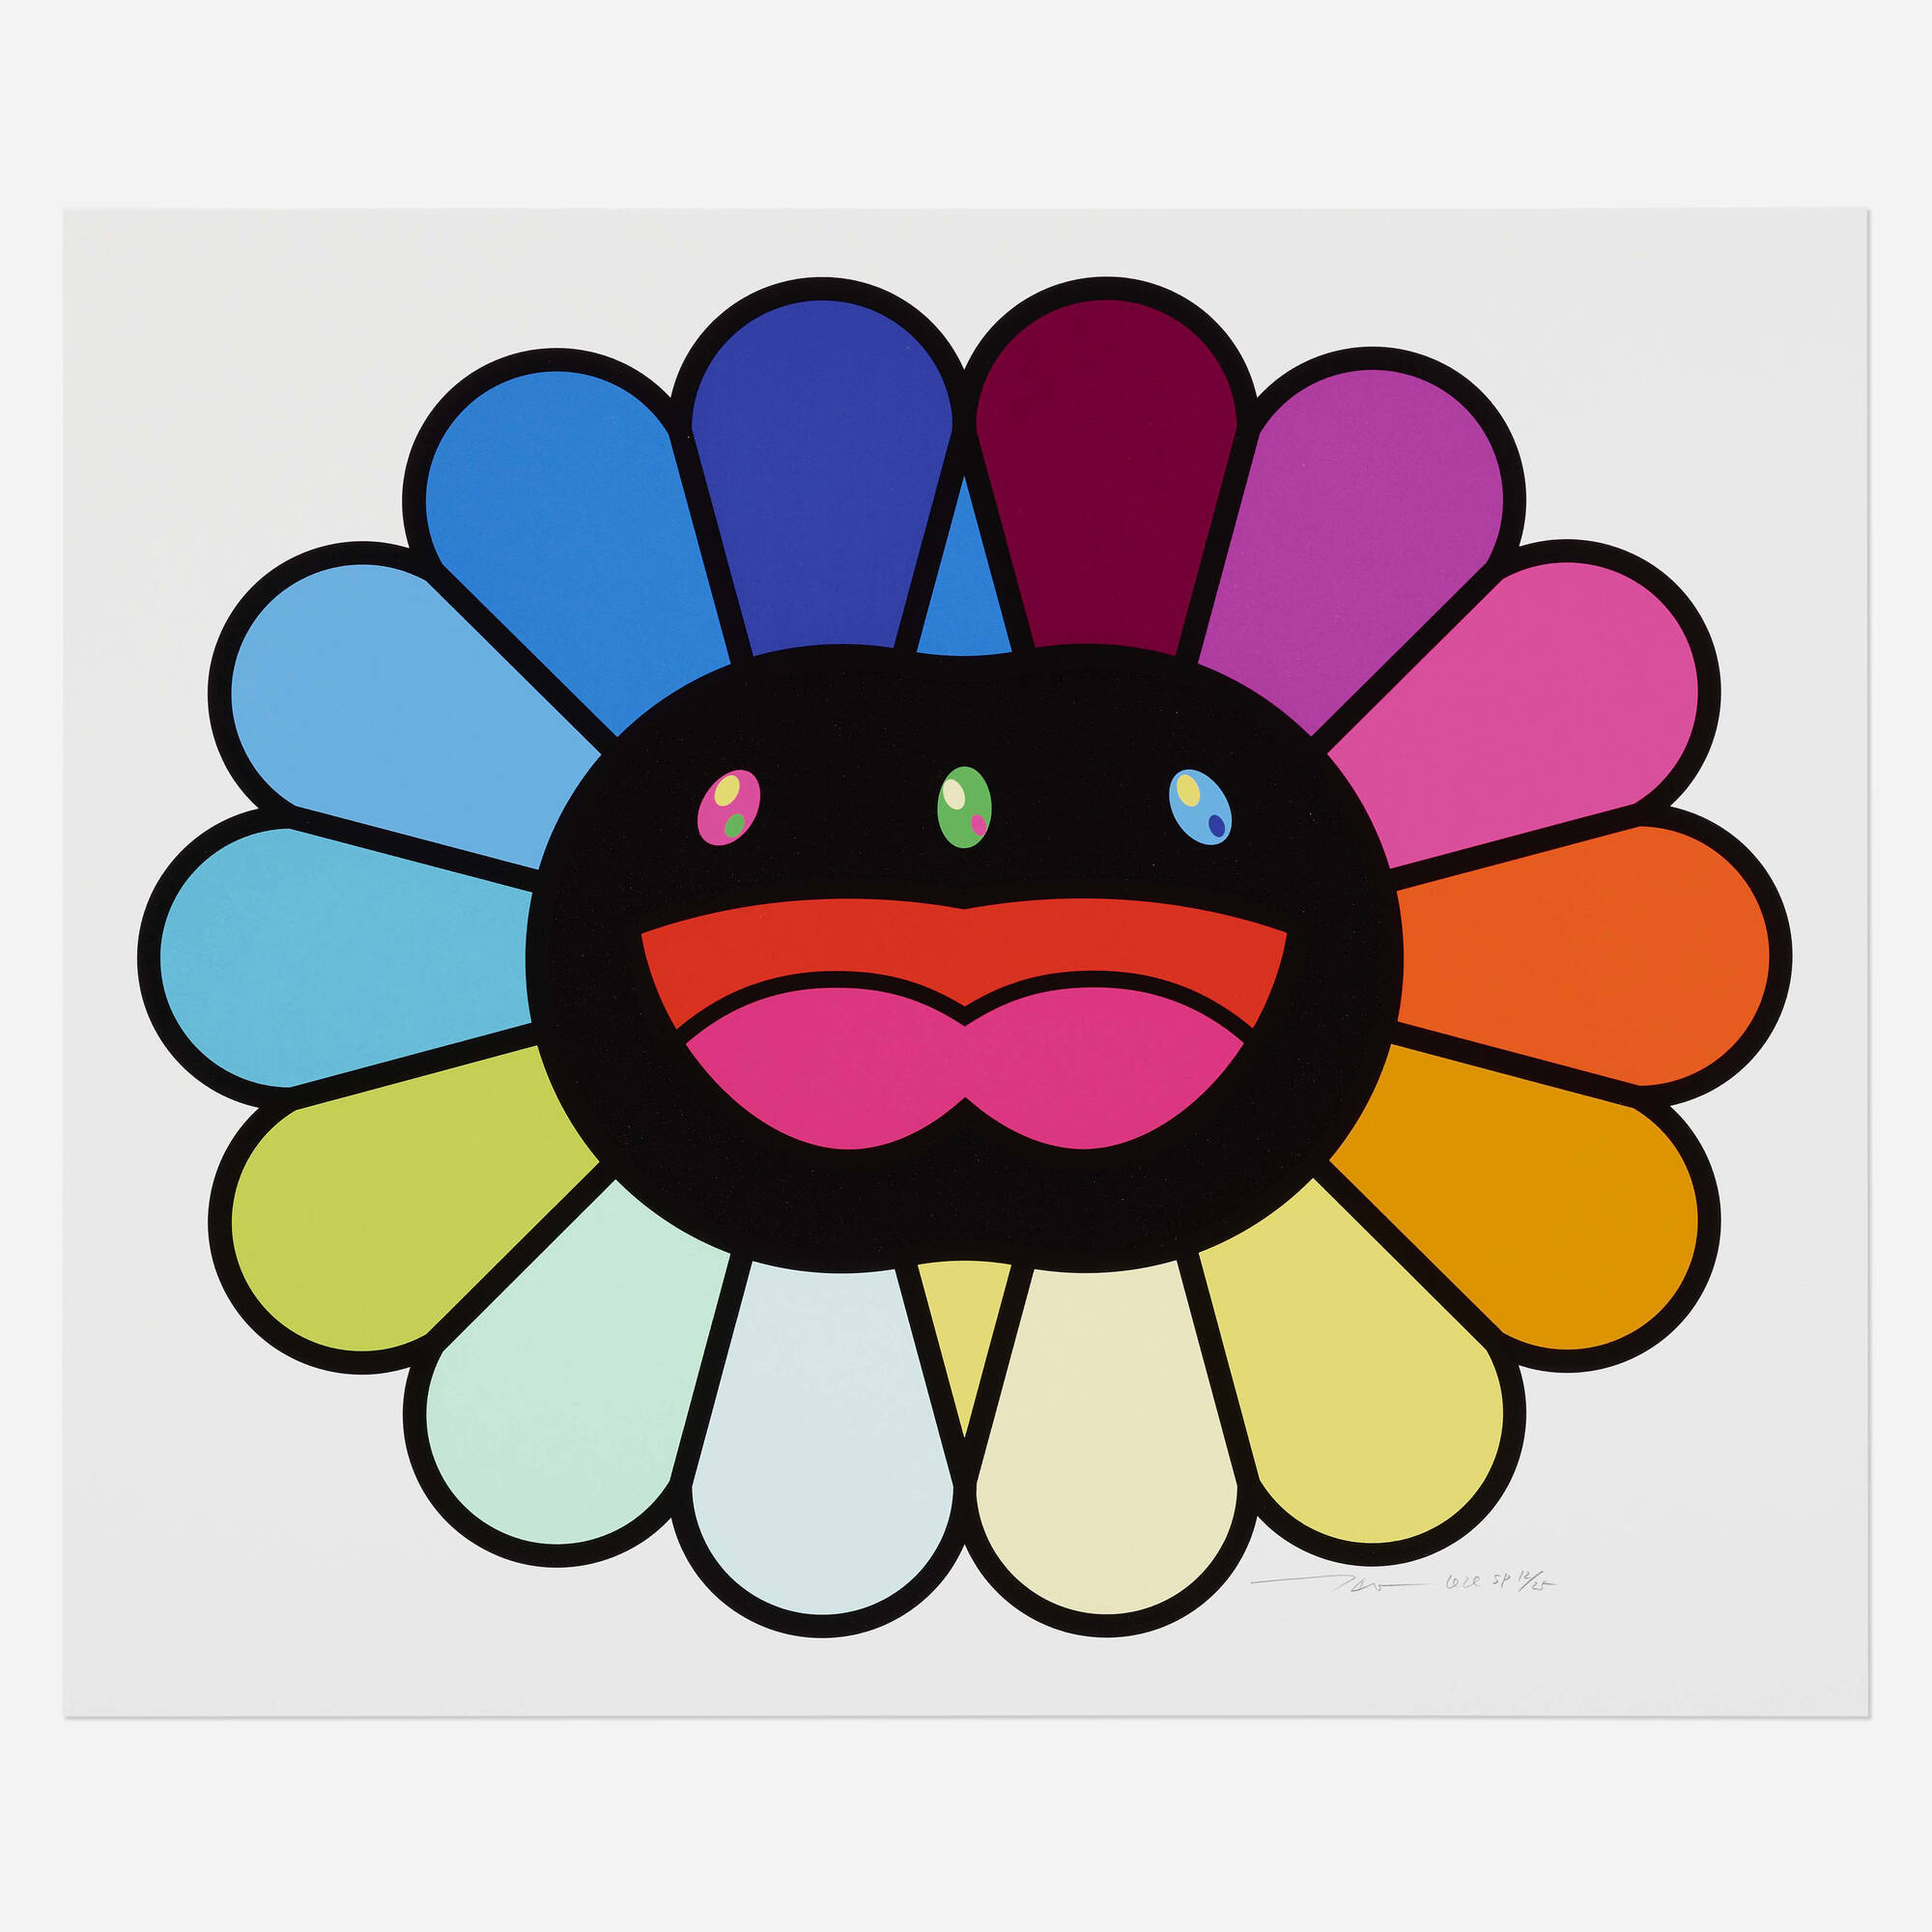 Takashi Murakami, (Japanese, b. 1962), Monogram Multicolore-black